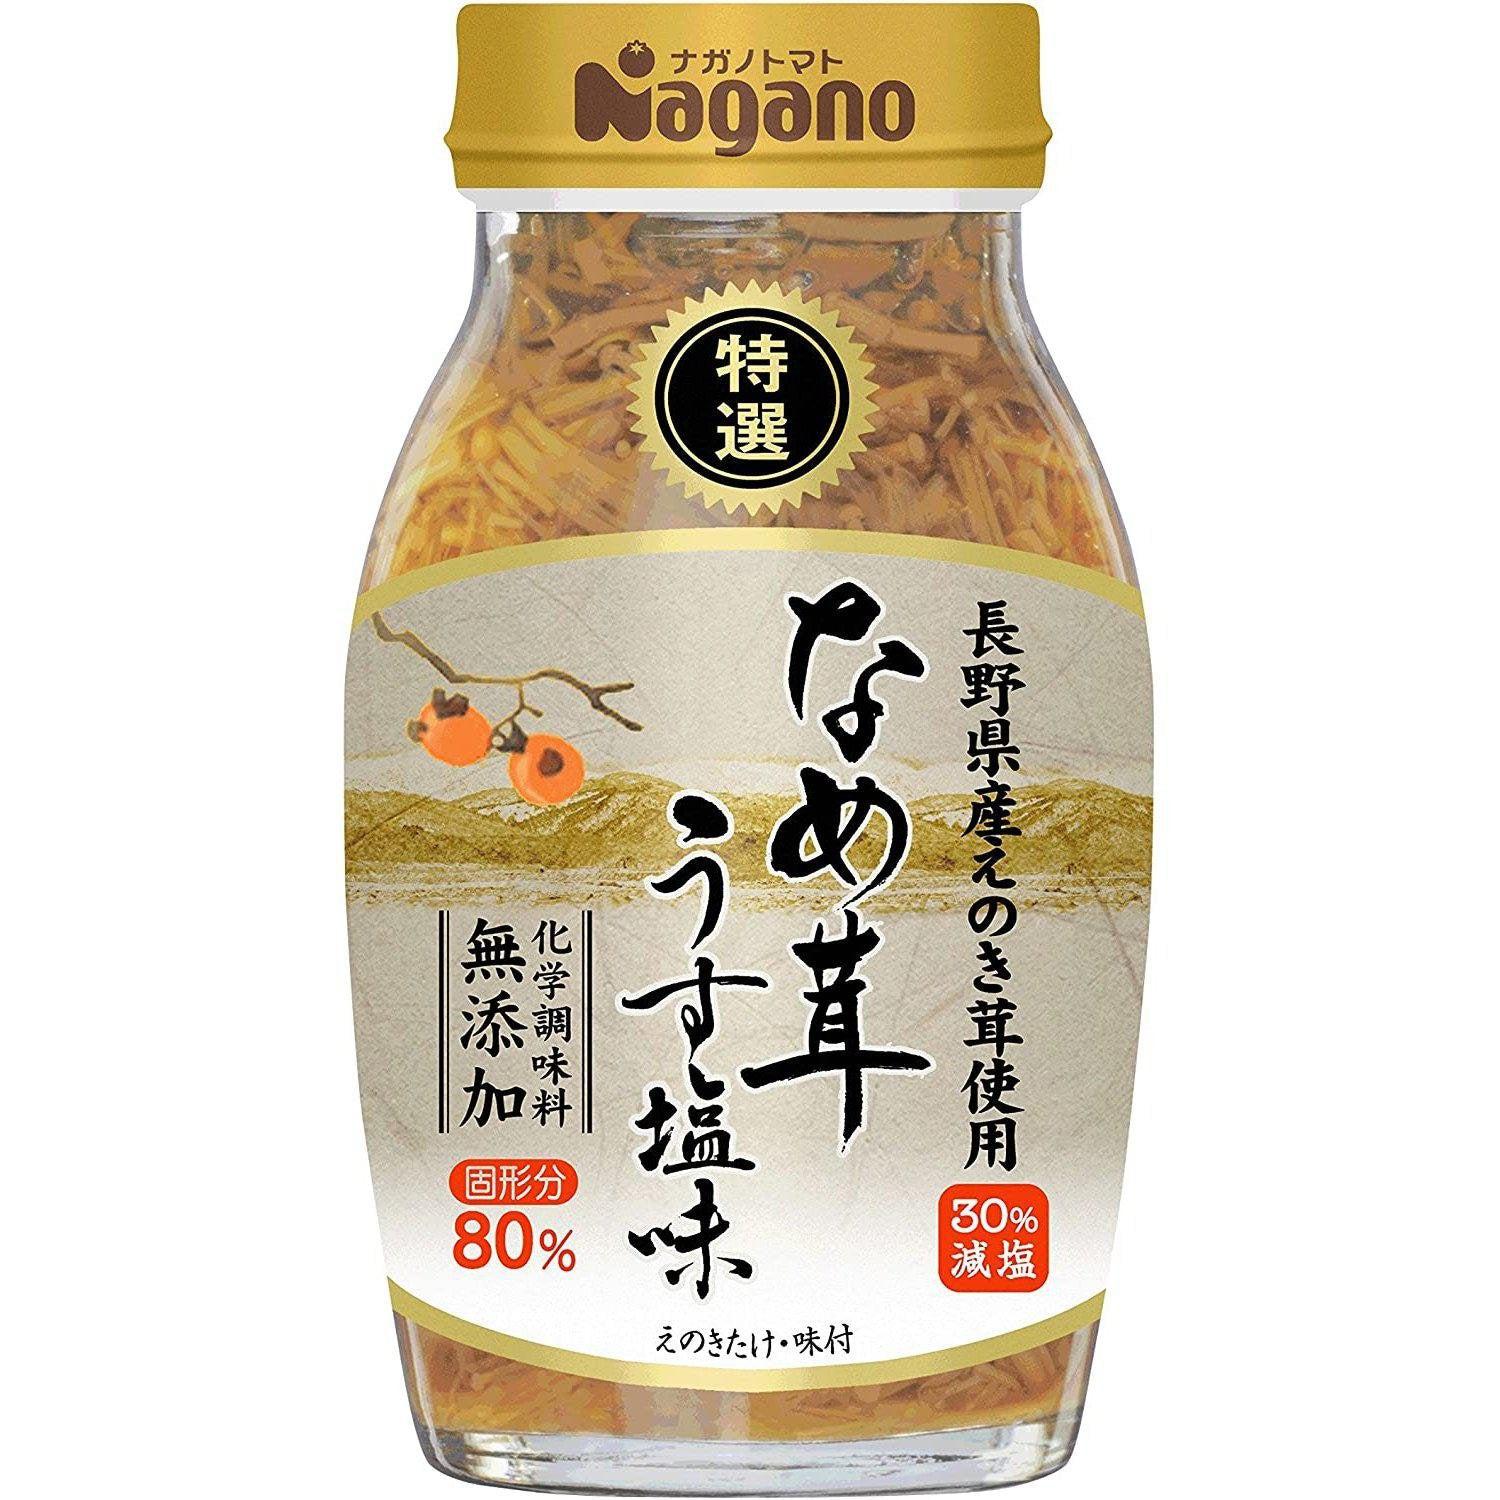 P-1-NGNO-NMETKE-180-Nagano Cooked Nametake Mushroom Lightly Salted 180g.jpg